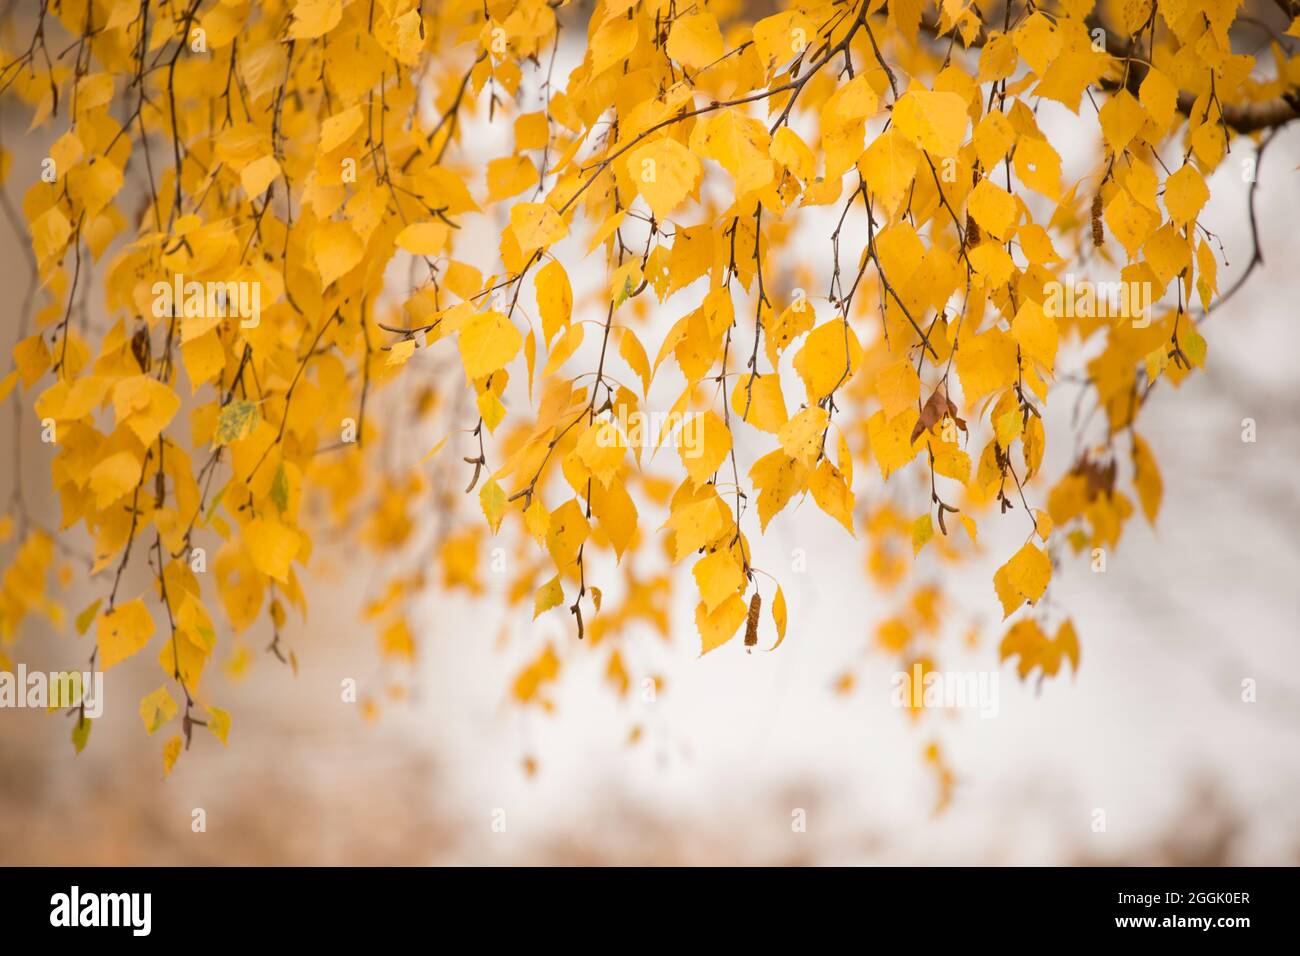 Abedul (Betula péndula) hojas en amarillo otoño, ramas colgantes, fondo natural borroso, escena de otoño Foto de stock